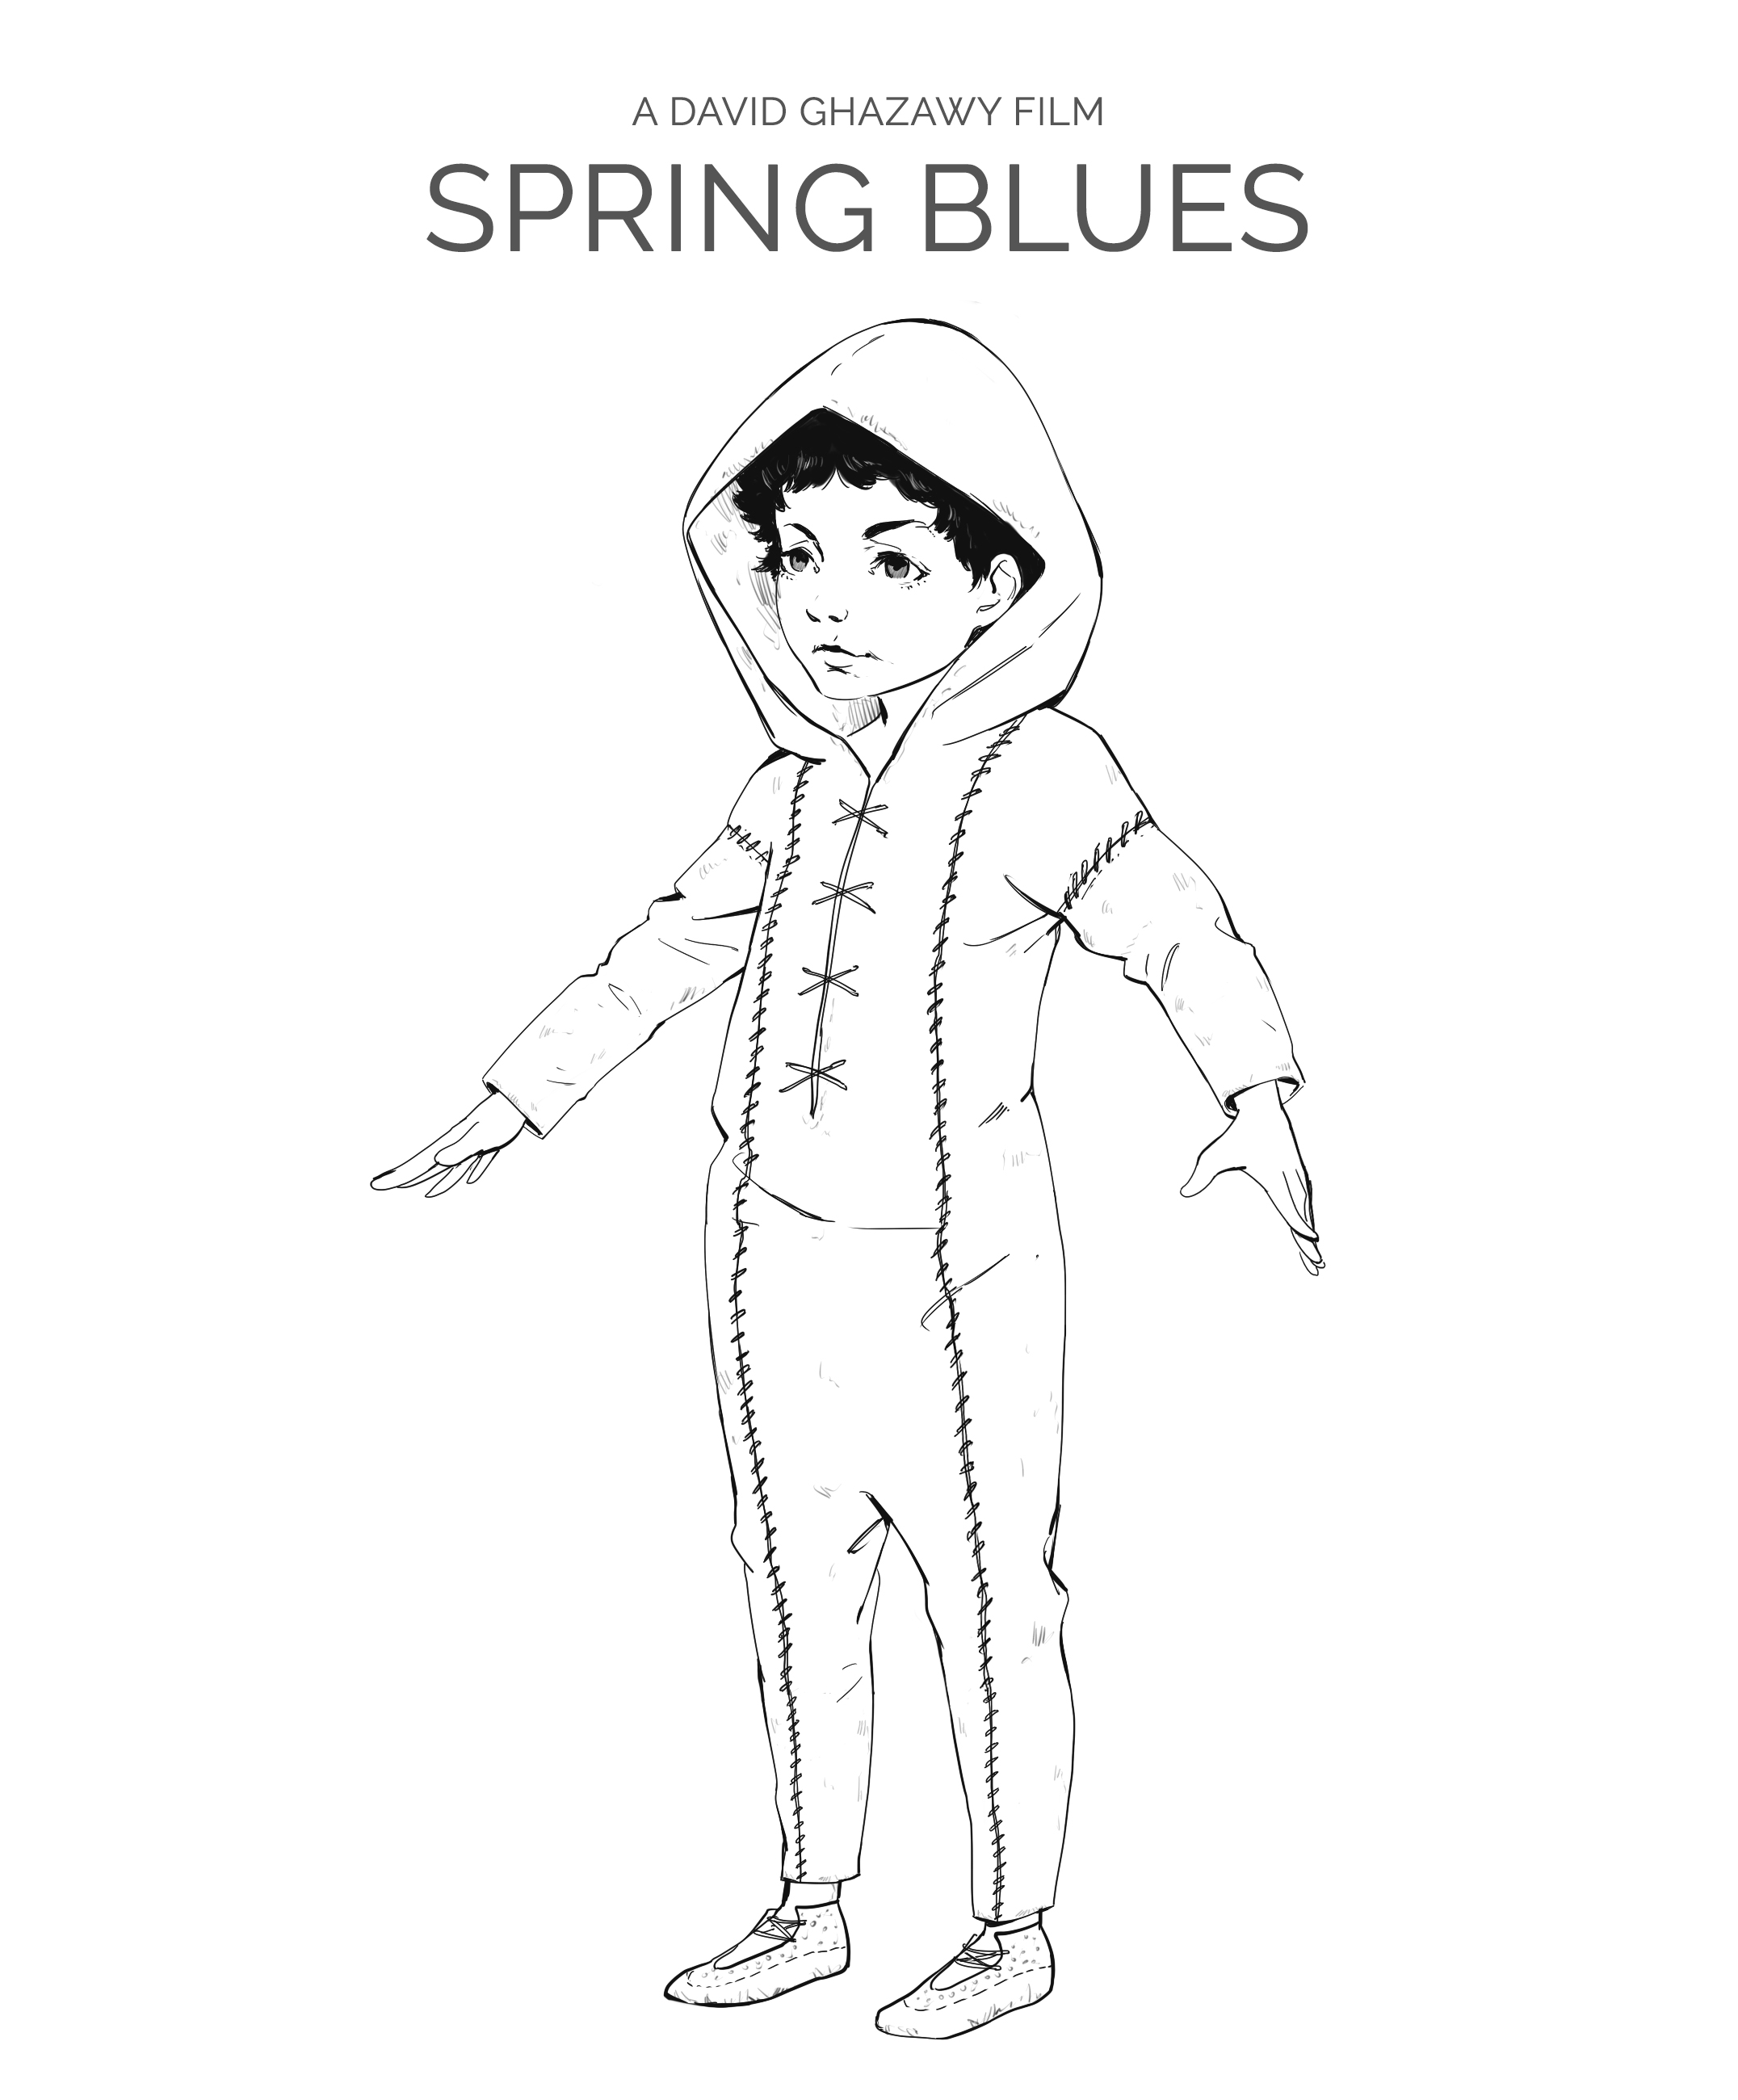 Spring Blues Film: Hard Working Child